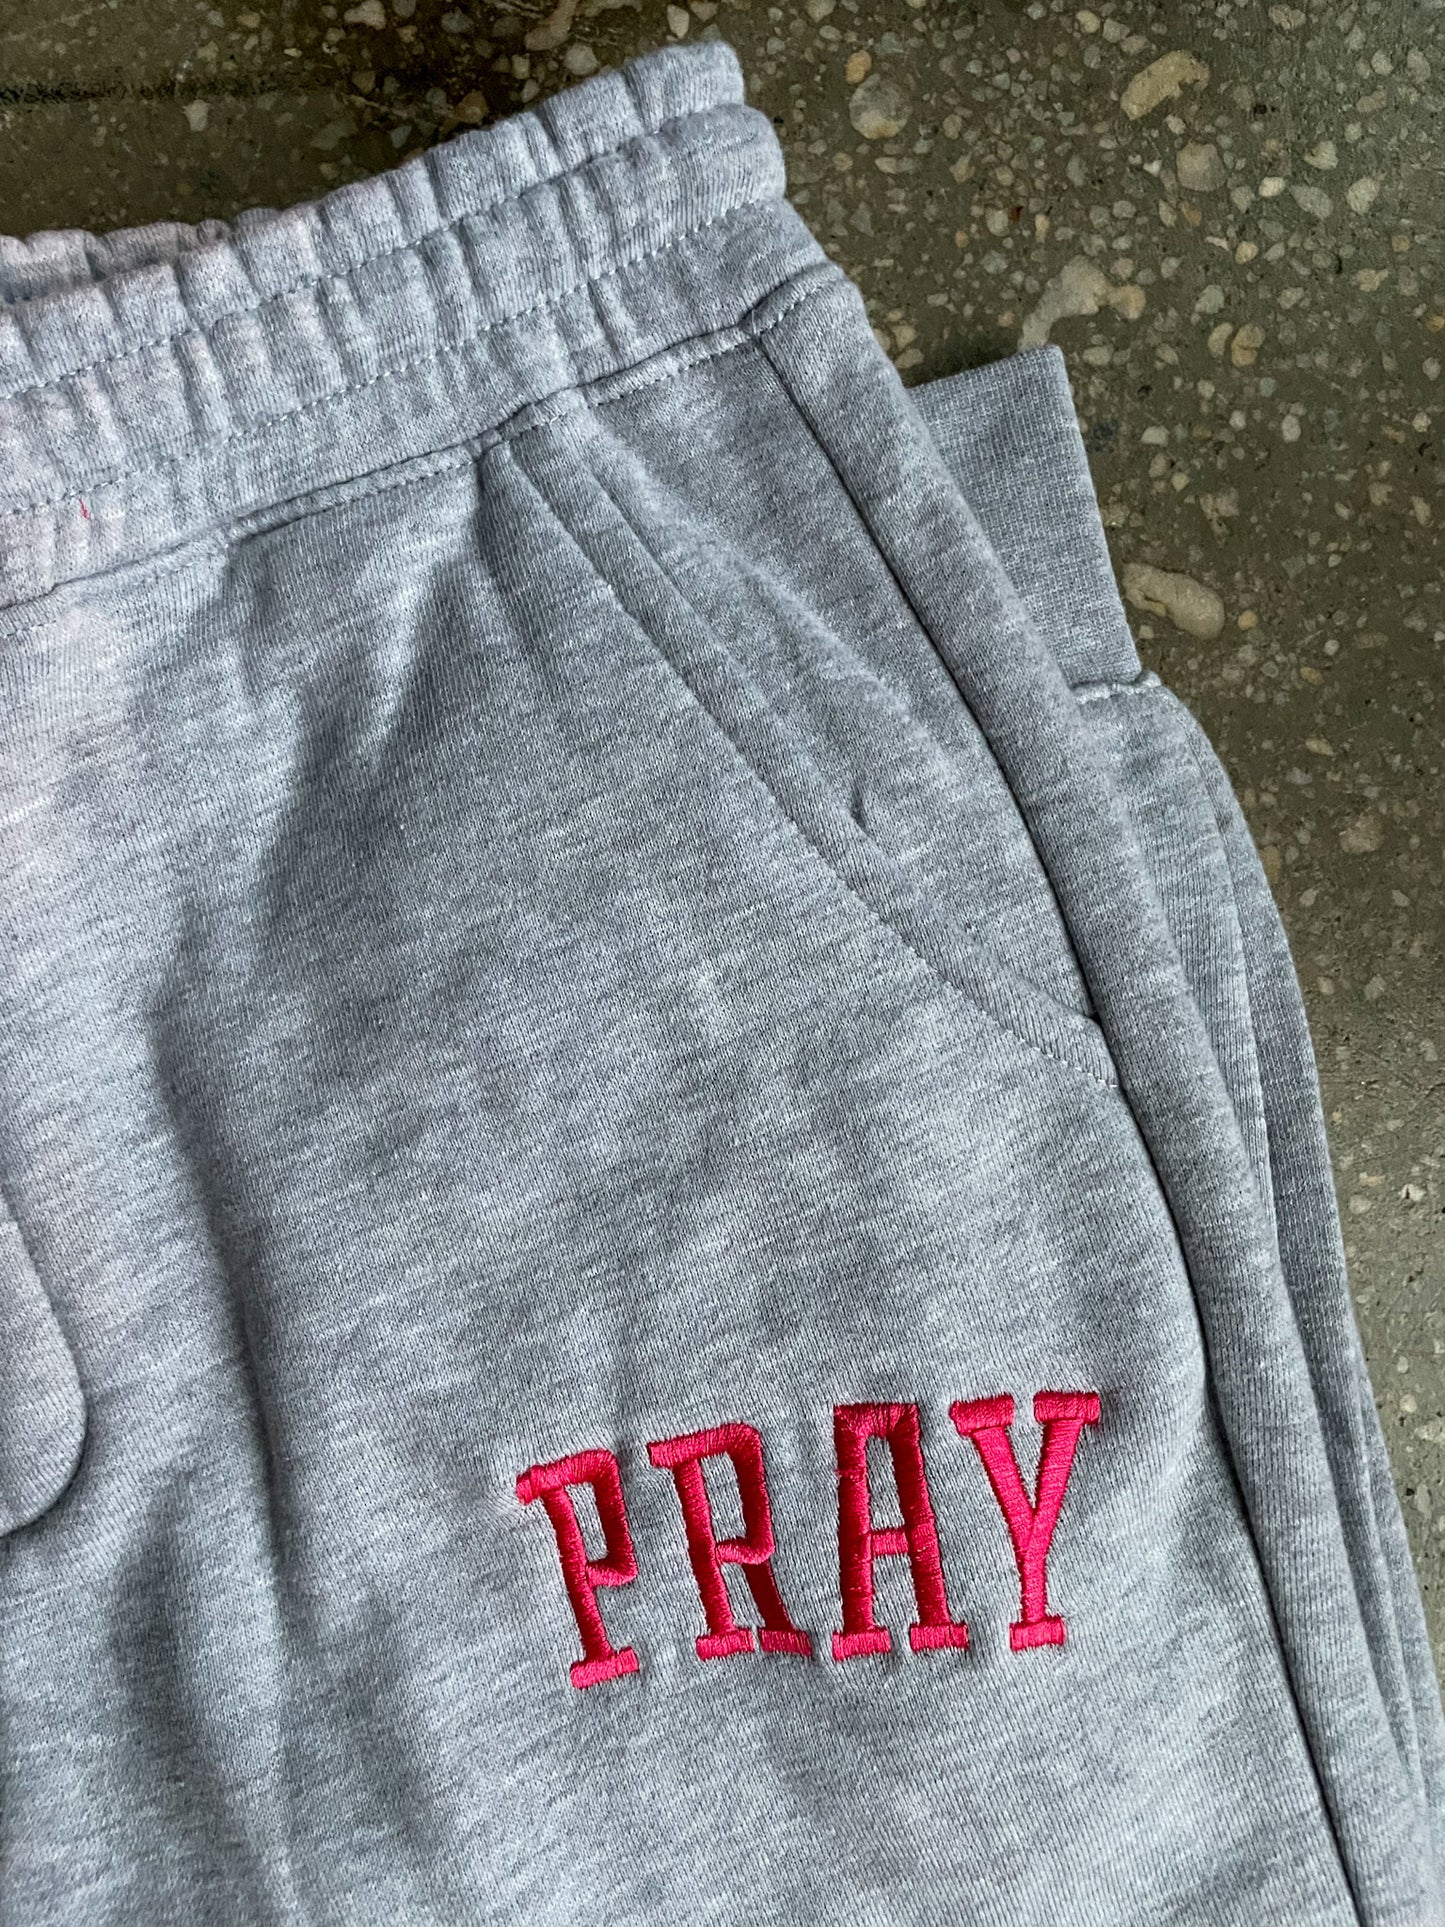 PRAY Embroidered Adult/Unisex Sweatpants